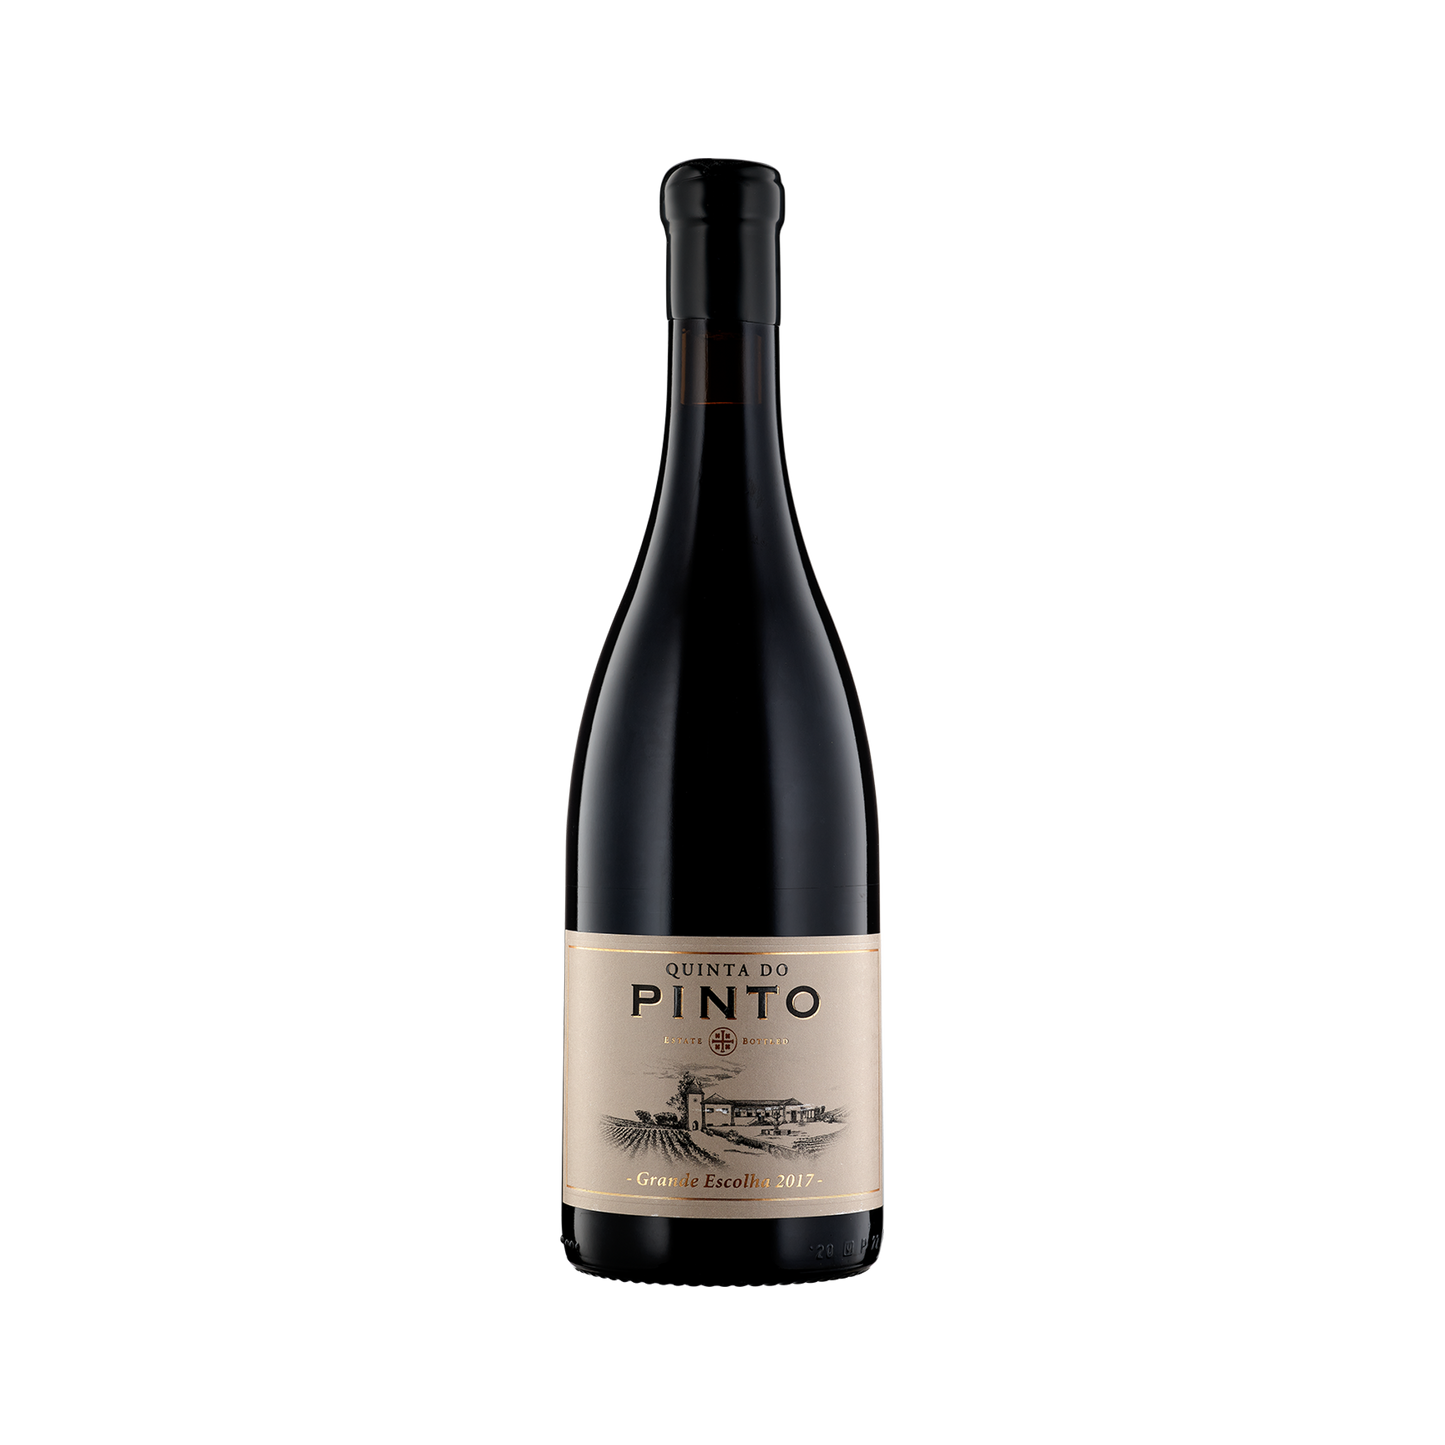 A bottle of Quinta do Pinto 2017 Red Blend Grande Escolha